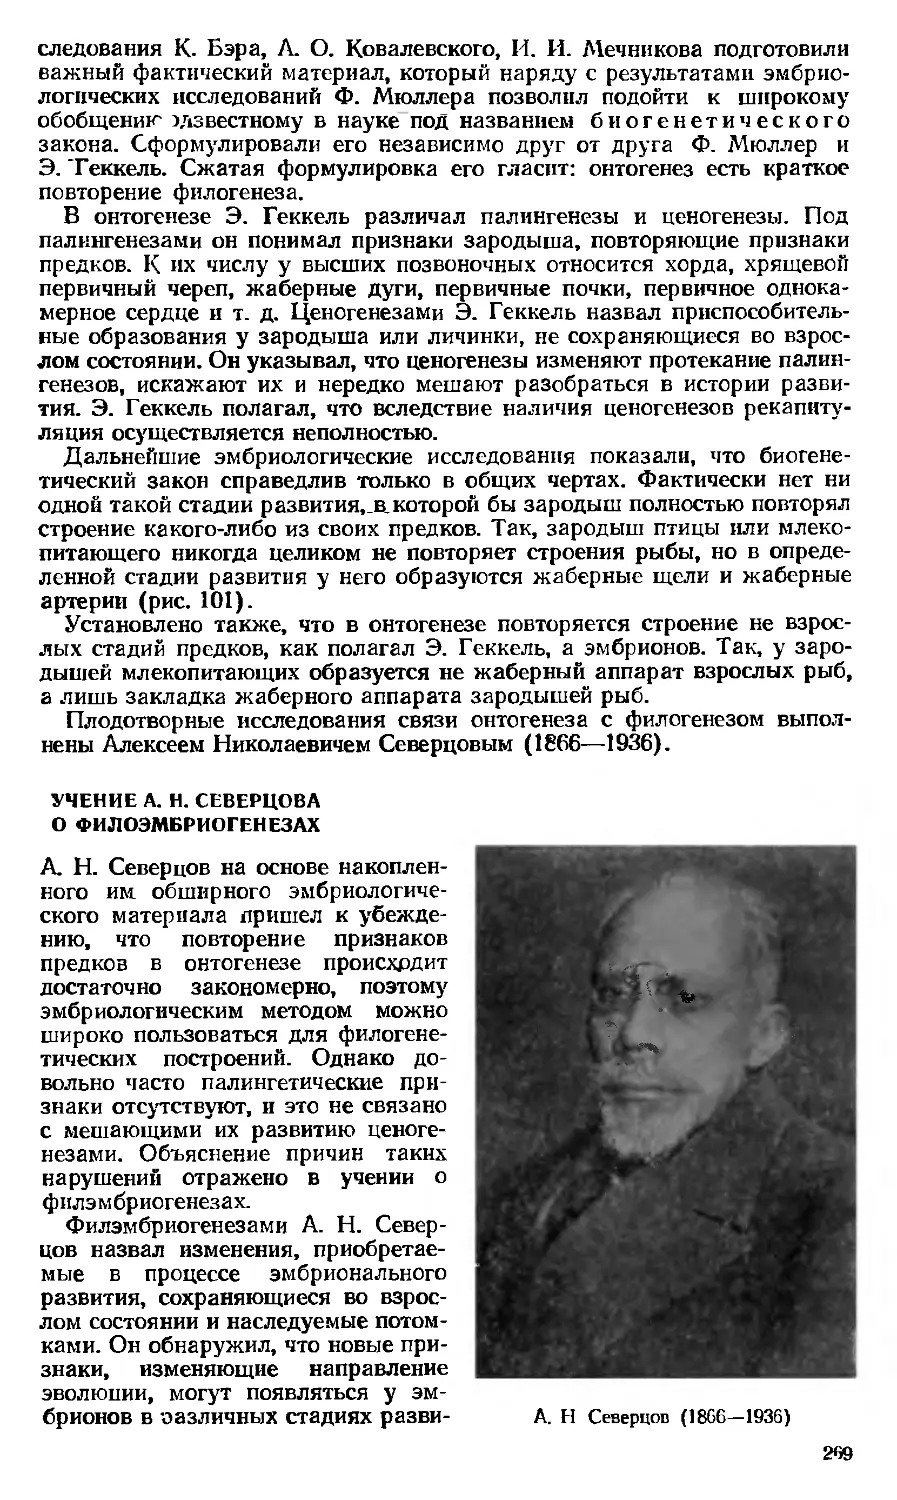 Учение А. Н. Северцова о филоэмбриогенезах